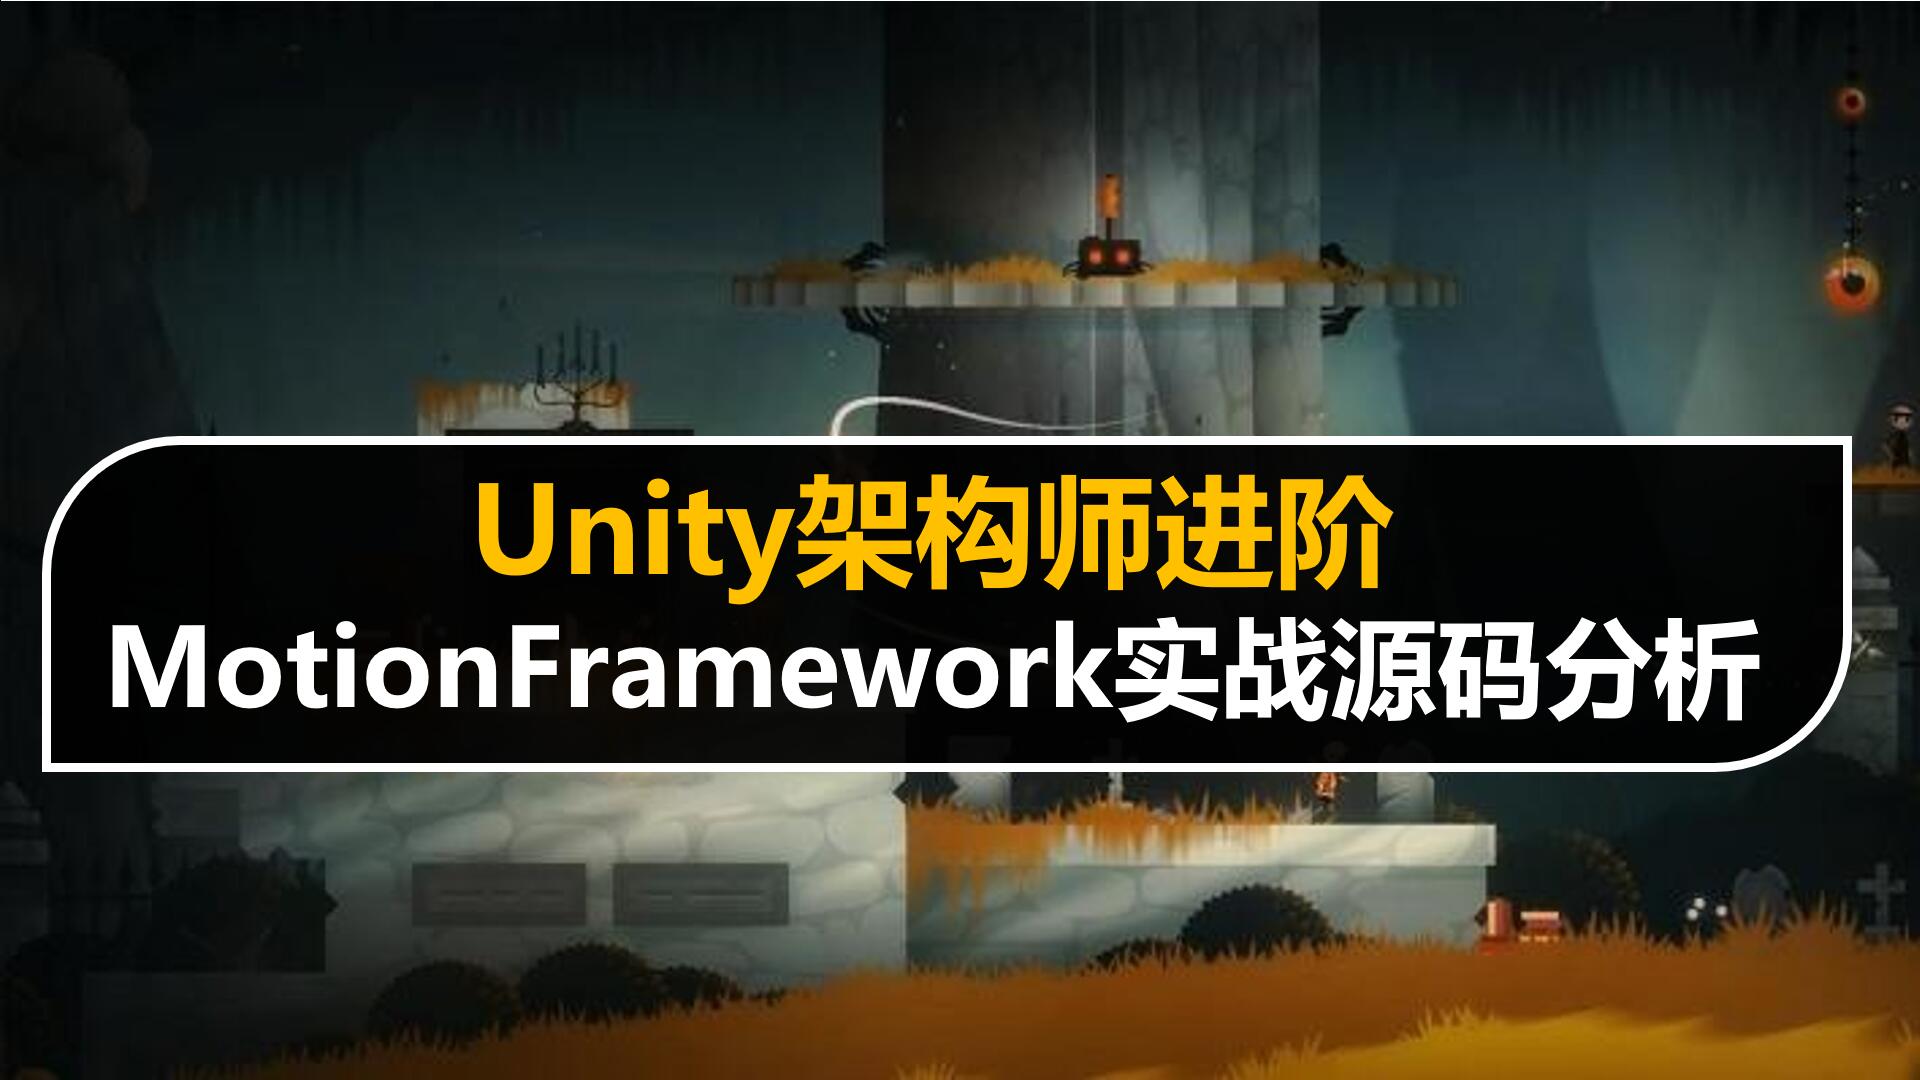 Unity架构师进阶:MotionFramework源码分析与实战